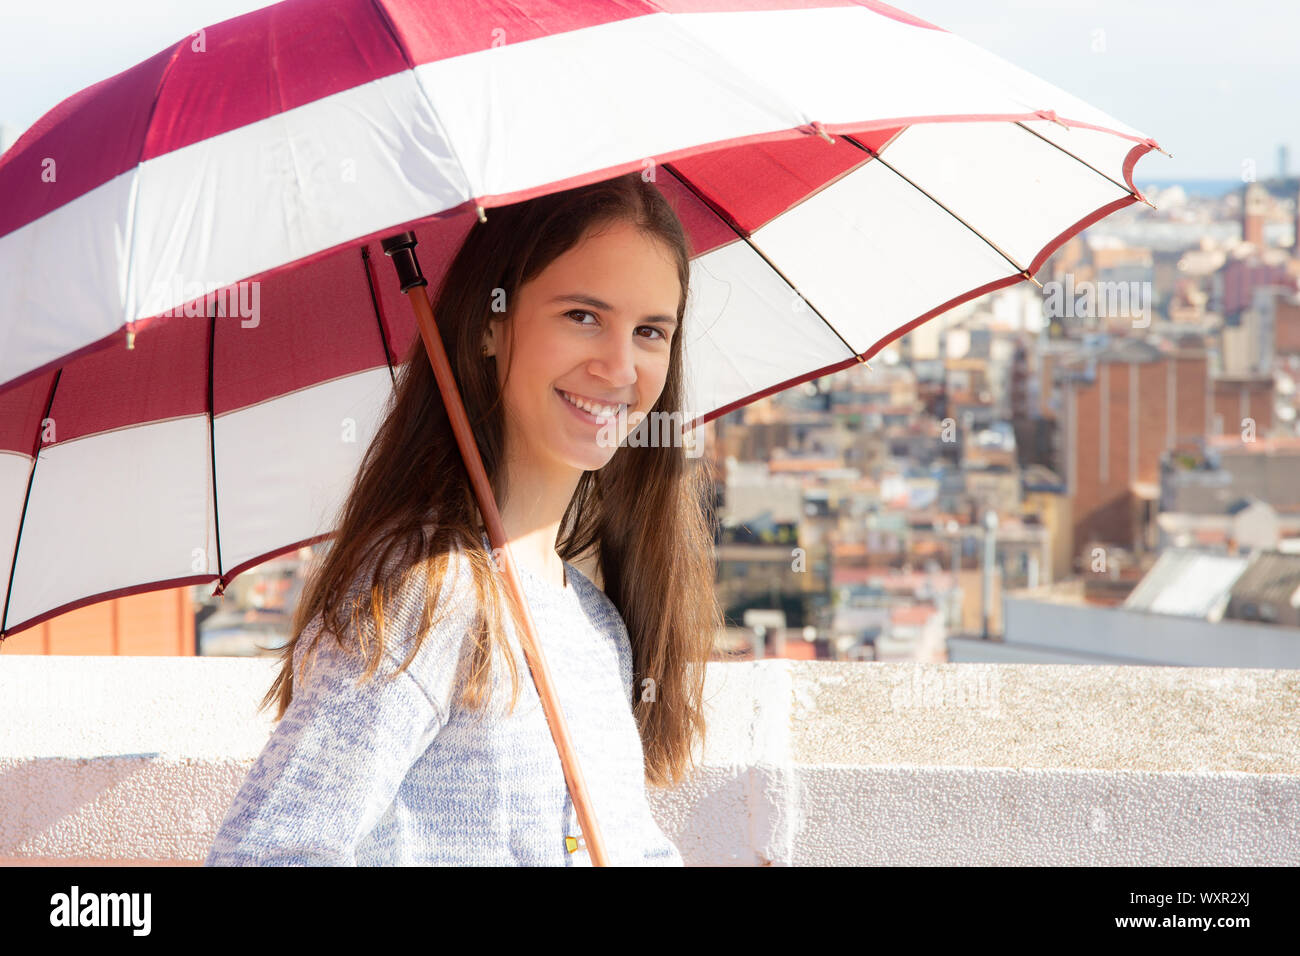 Chica adolescente protegiéndose del sol con una sombrilla en la azotea  Stock Photo - Alamy